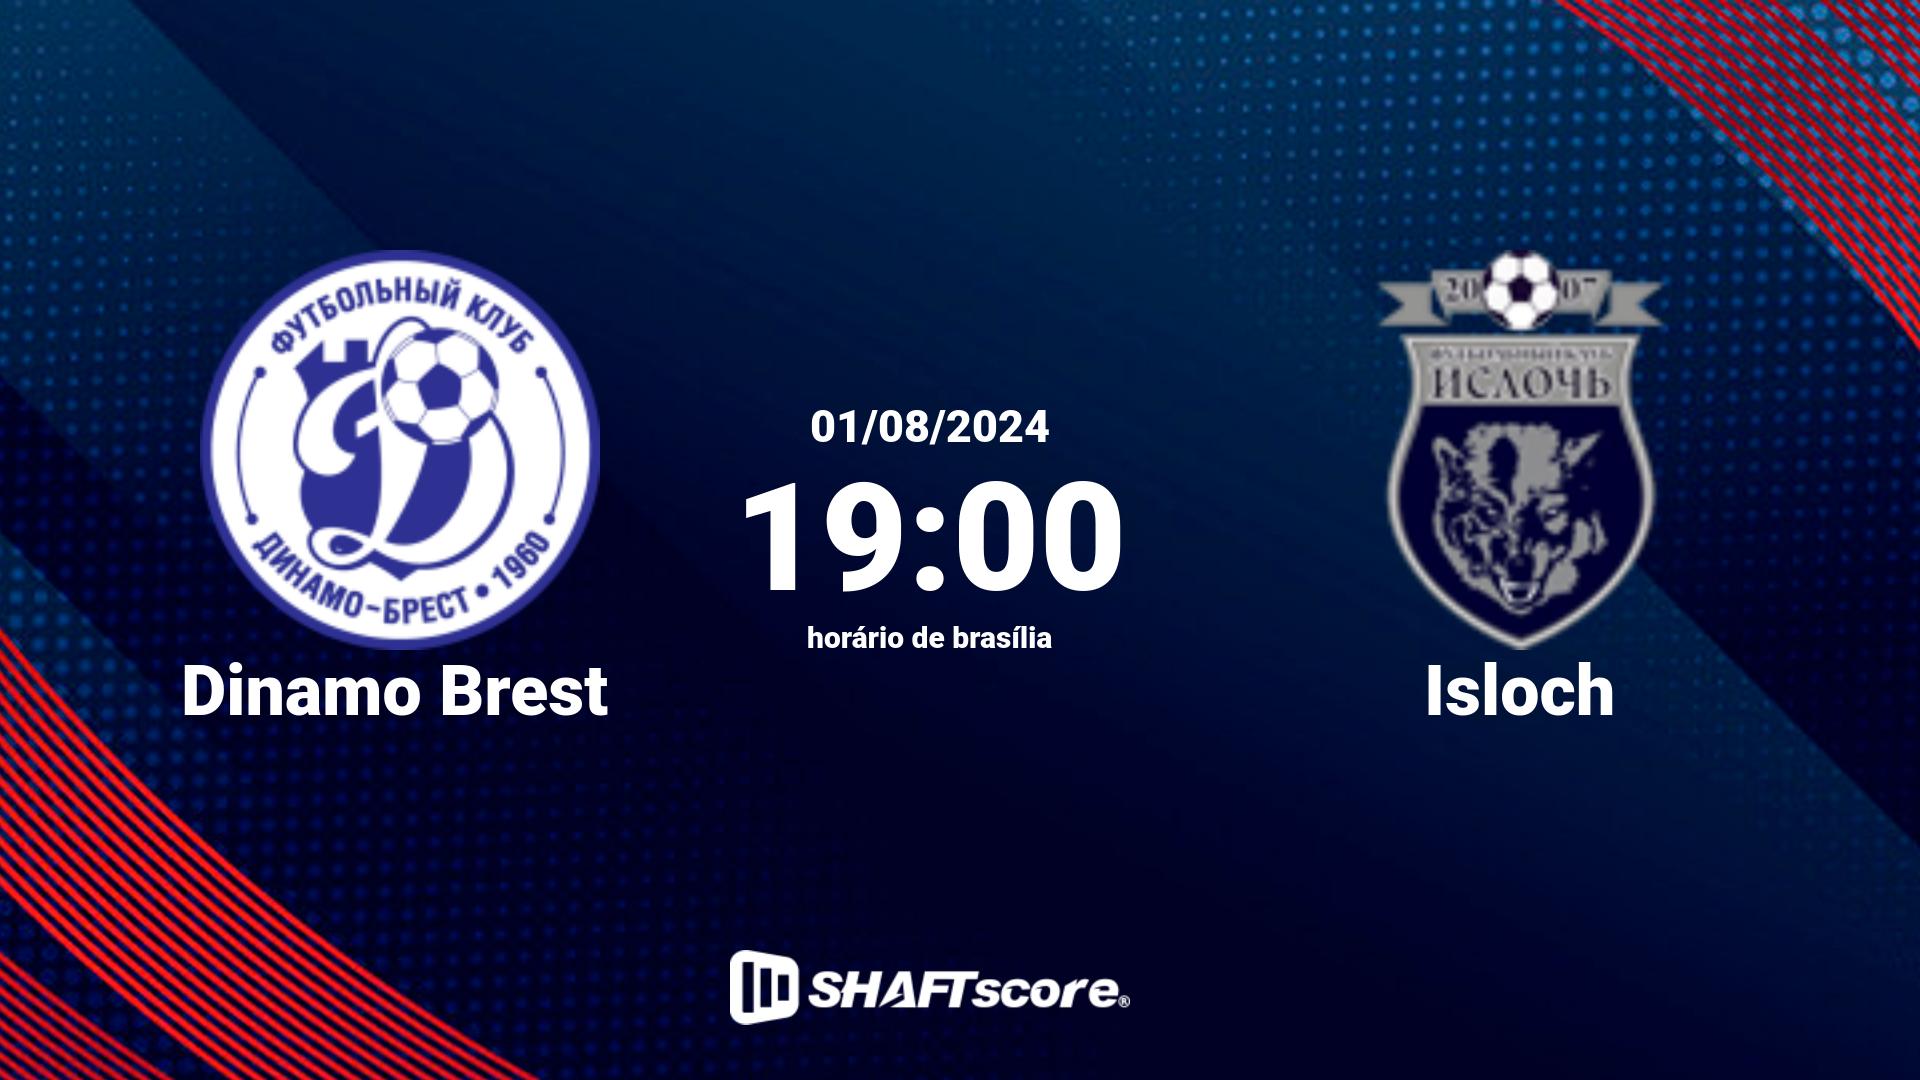 Estatísticas do jogo Dinamo Brest vs Isloch 01.08 19:00